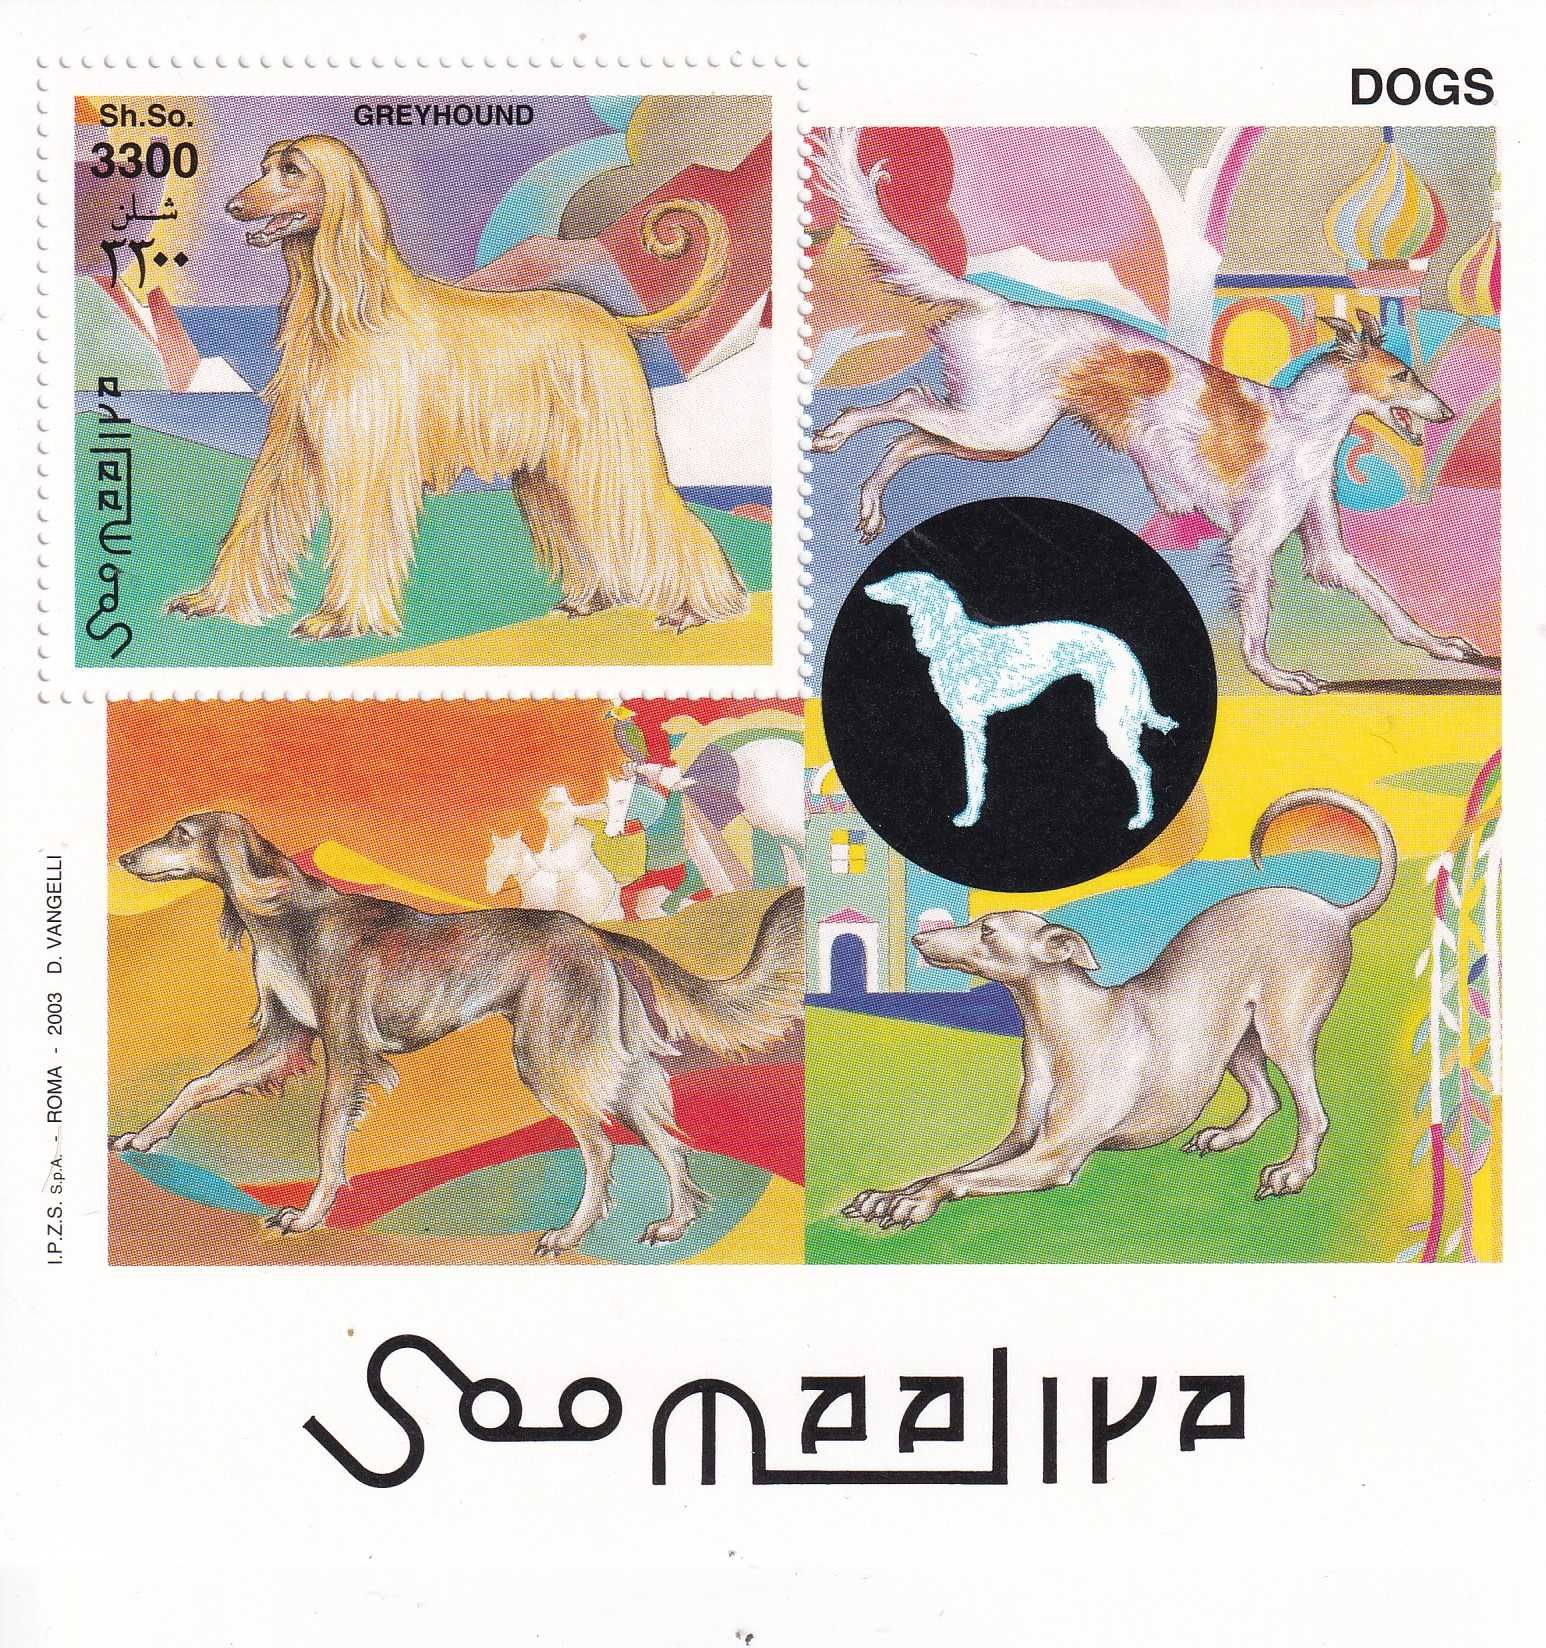 Somalia 2003 cena 5,90 zł - psy